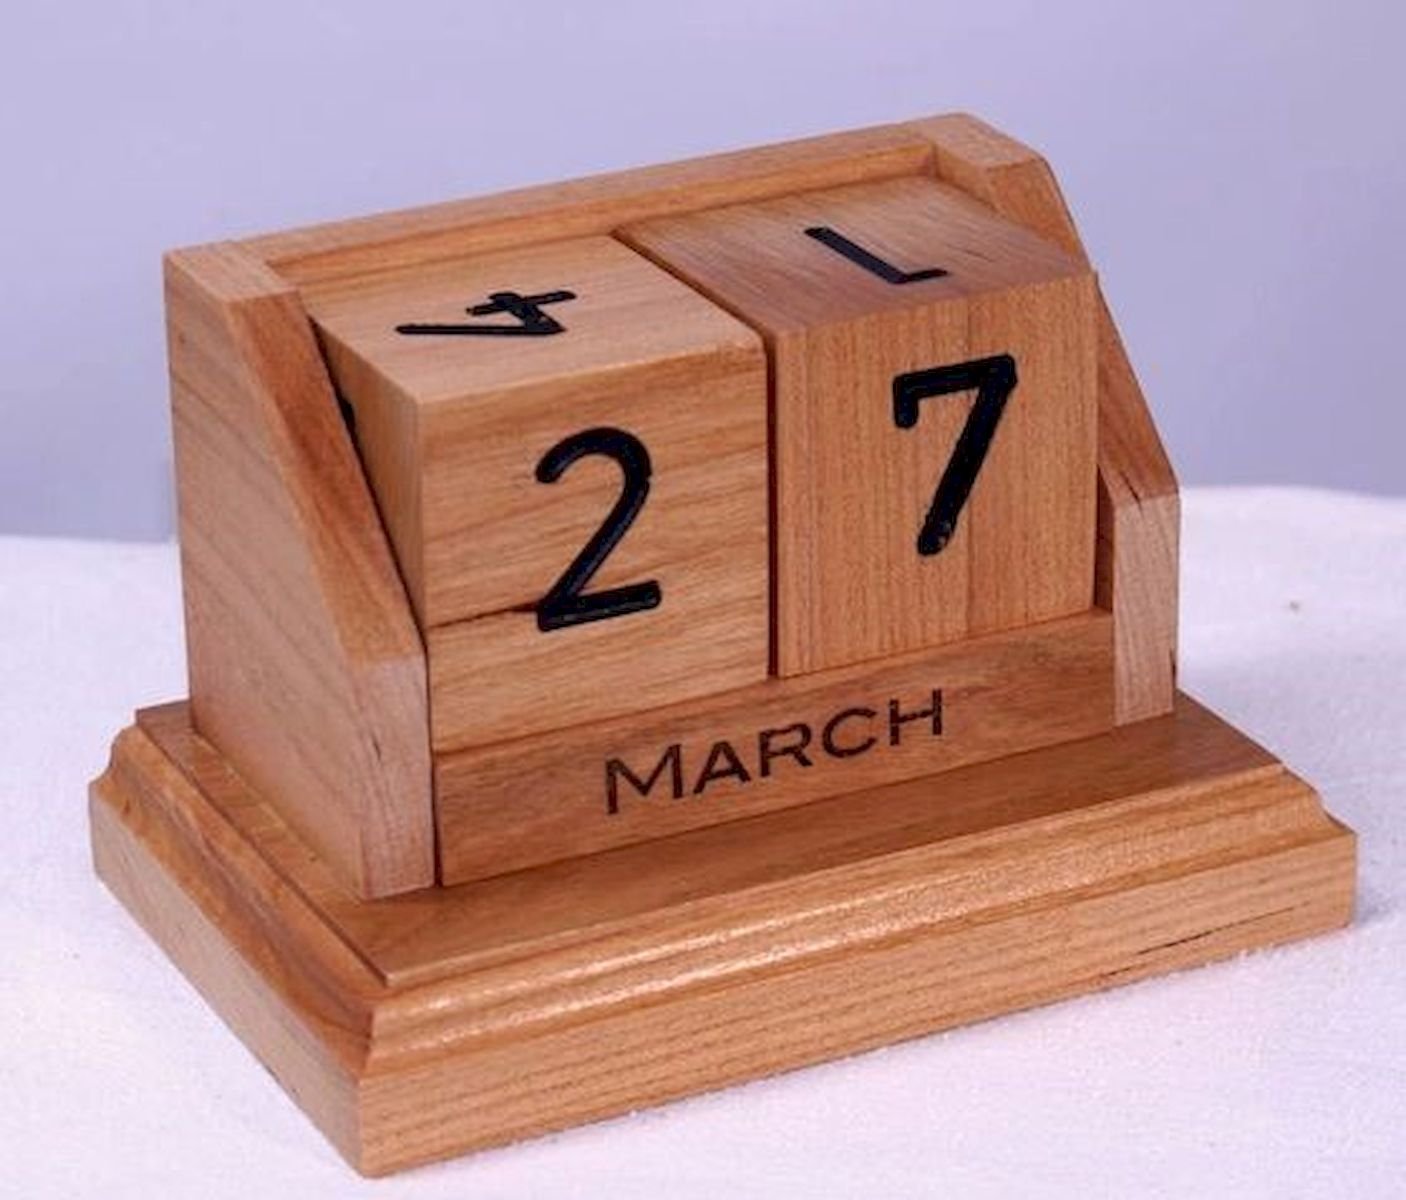 Календарь из кубиков. Календарь деревянный настольный. Вечный календарь. Настольный календарь из дерева. Вечный календарь деревянный.